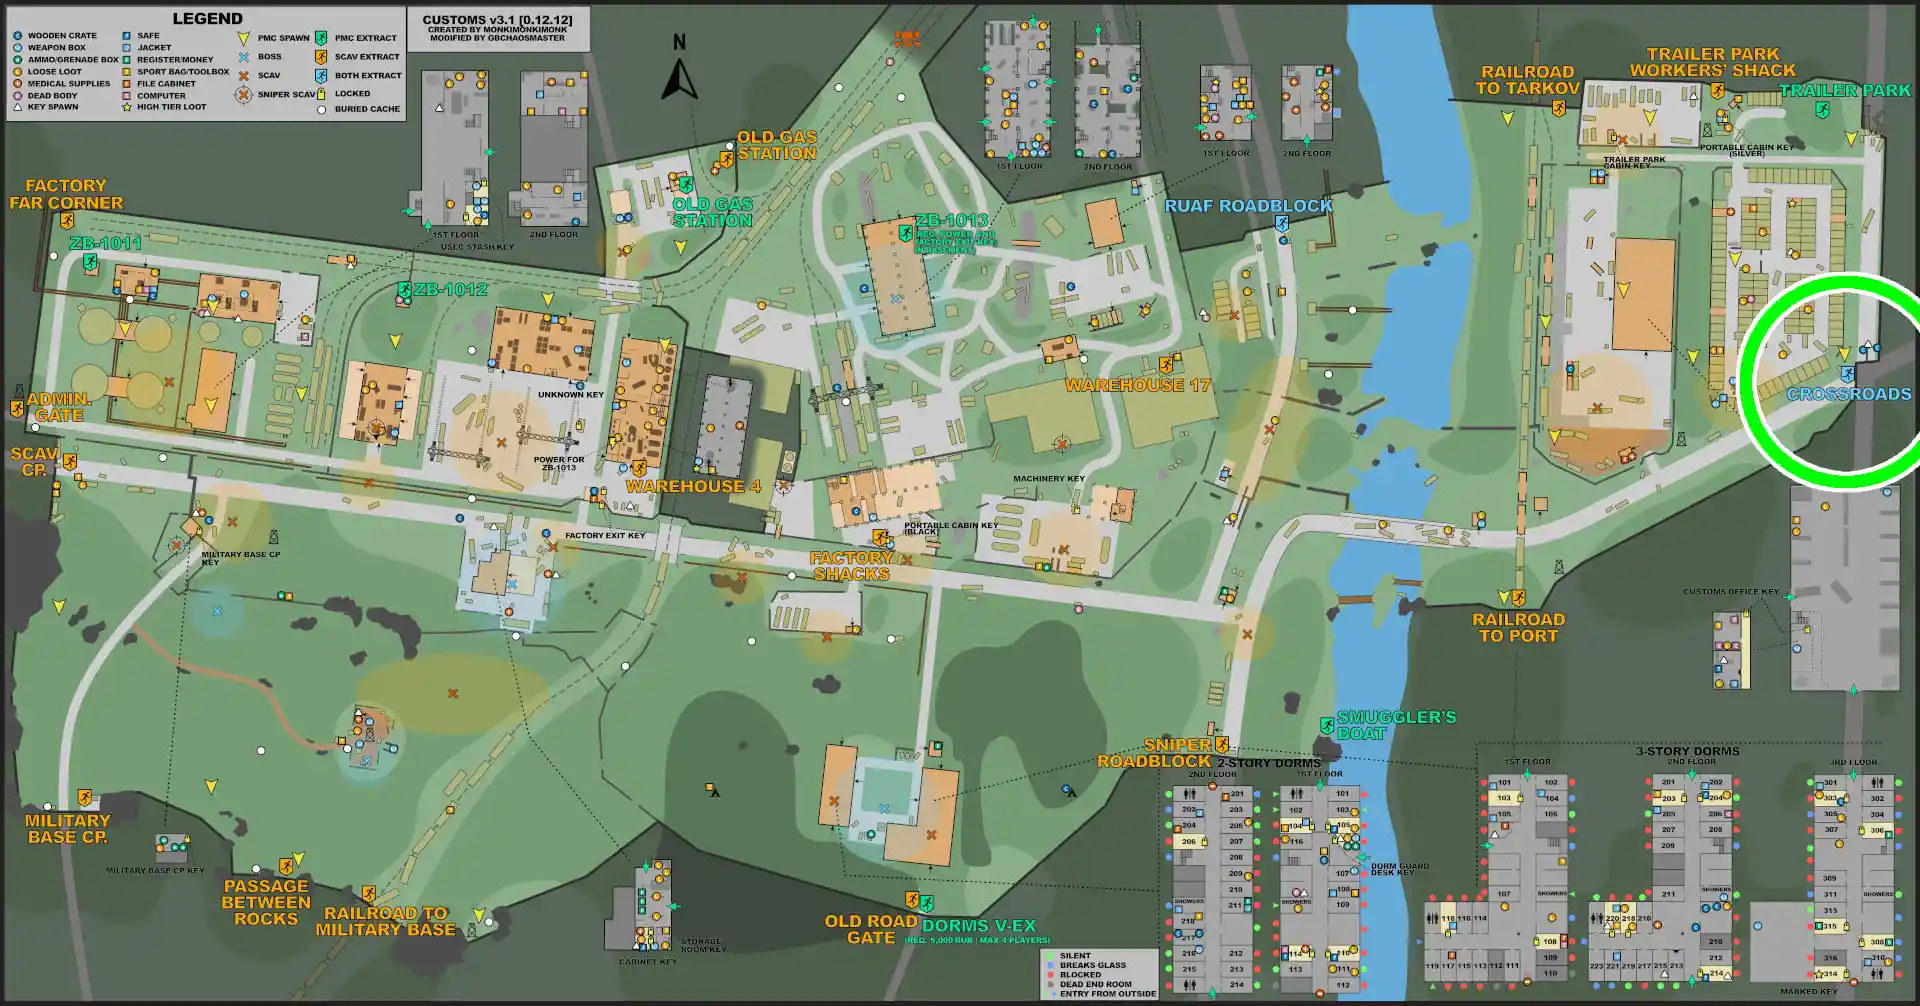 CUSTOMS-ESC-Crossroads-MAP.jpg